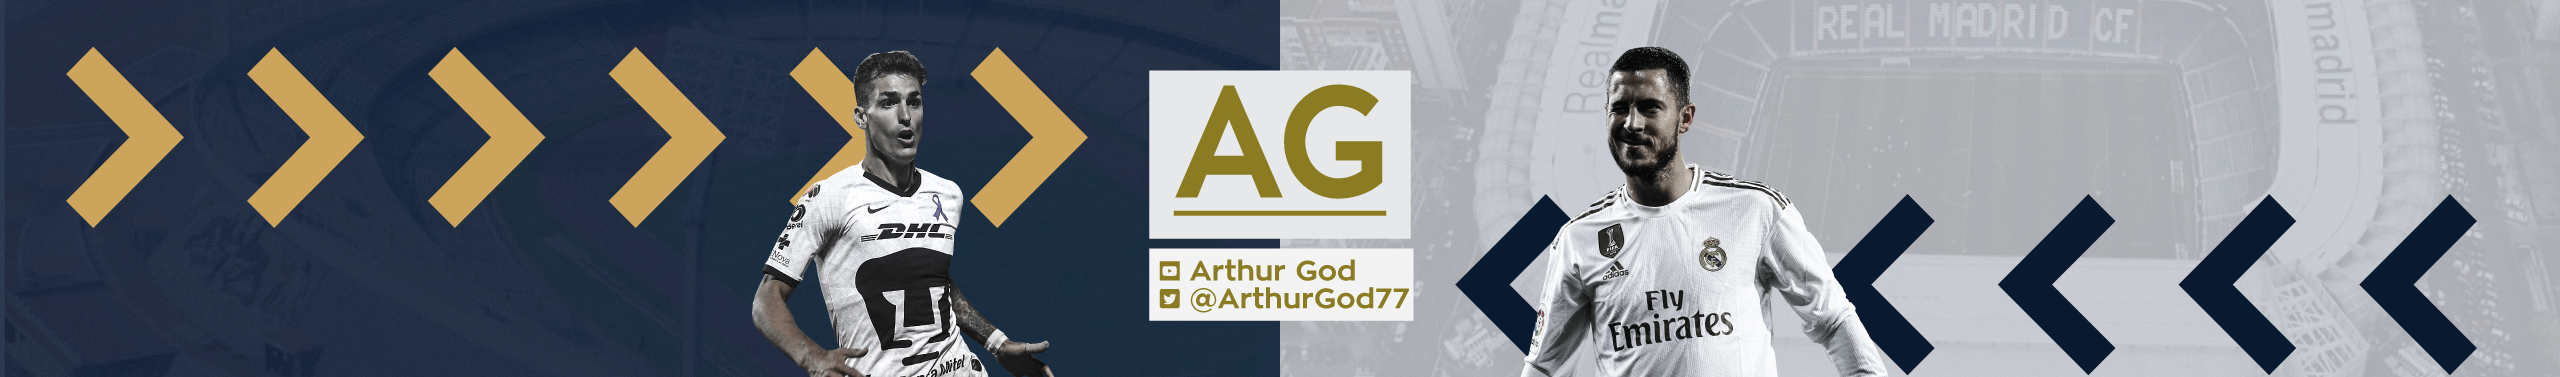 Arthur God's profile banner